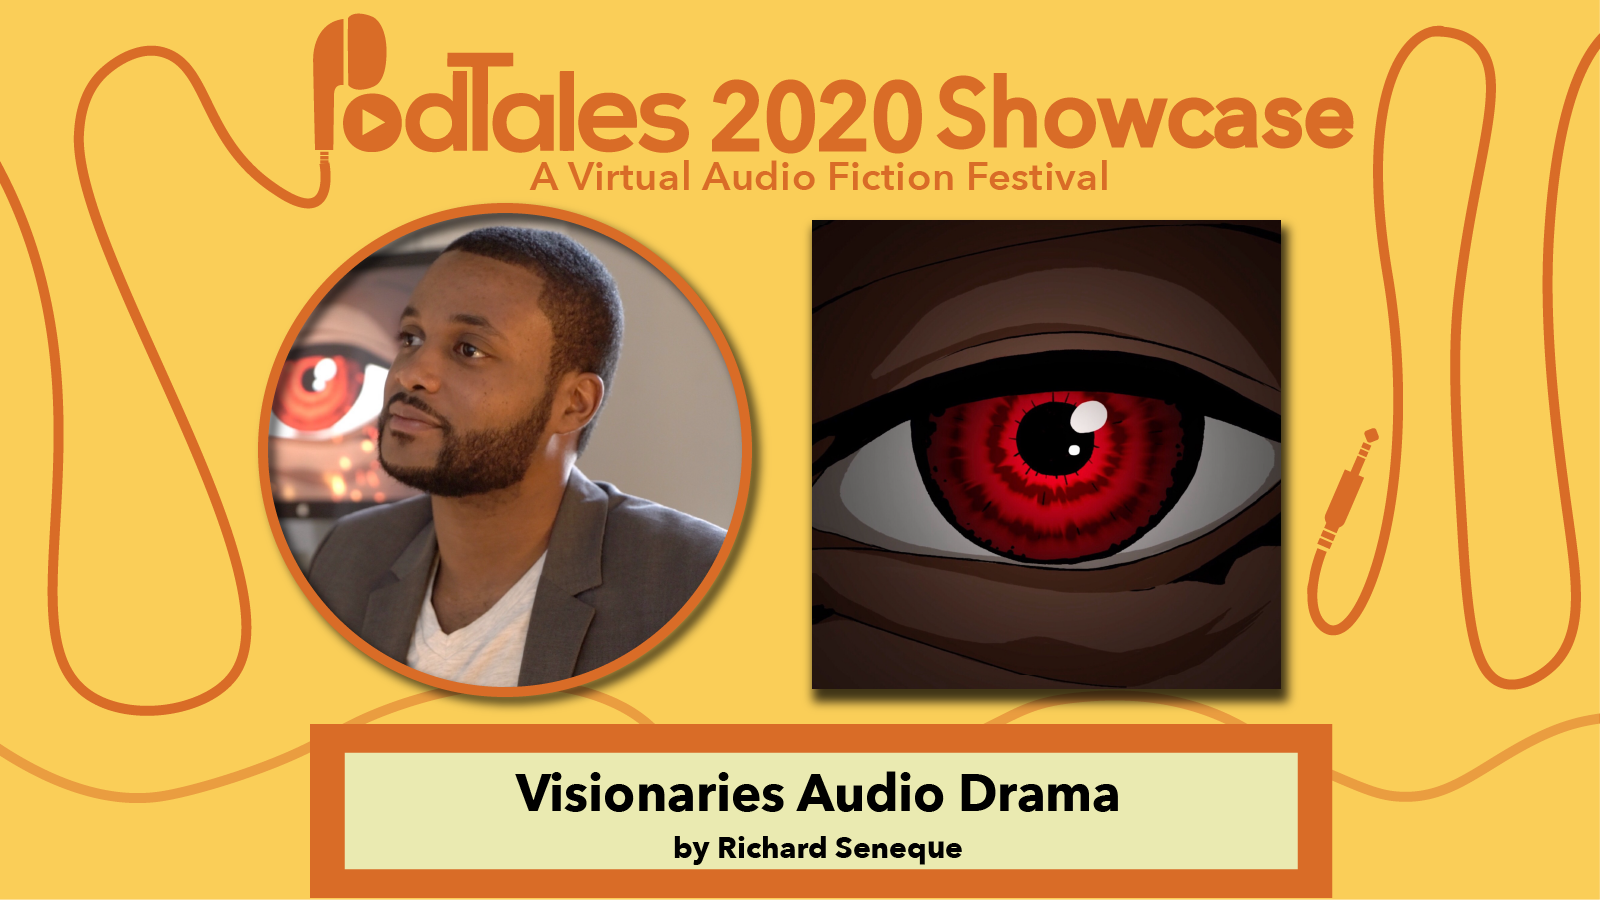 Text reading “PodTales 2020 Showcase: A Virtual Audio Fiction Festival”, Photo of Richard Seneque, Show Art for Visionaries Audio Drama, Text reading “Visionaries Audio Drama by Richard Seneque”